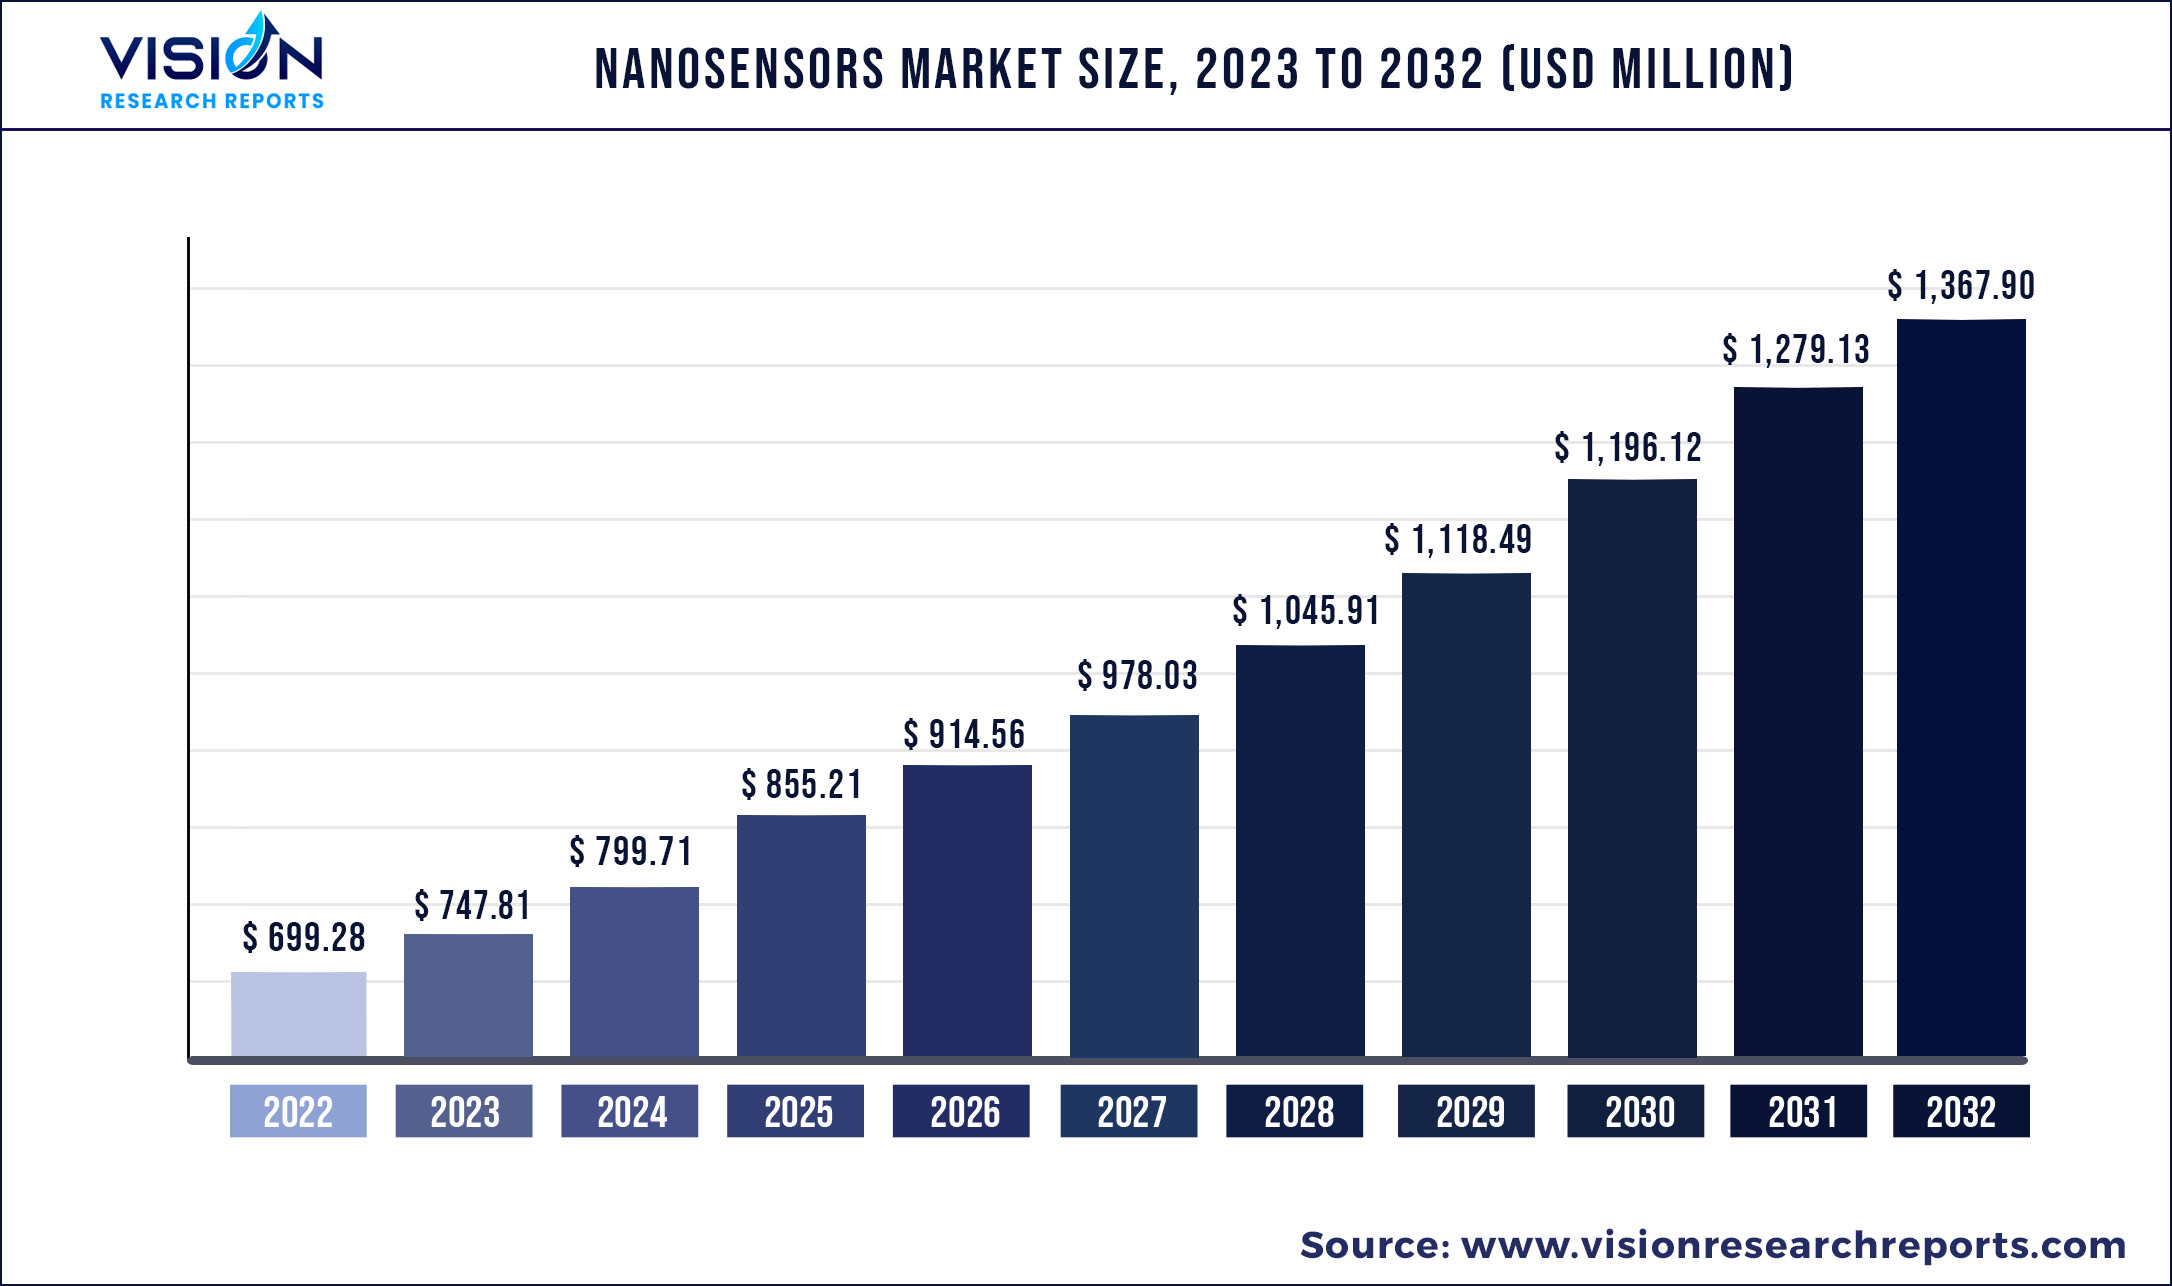 Nanosensors Market Size 2023 to 2032